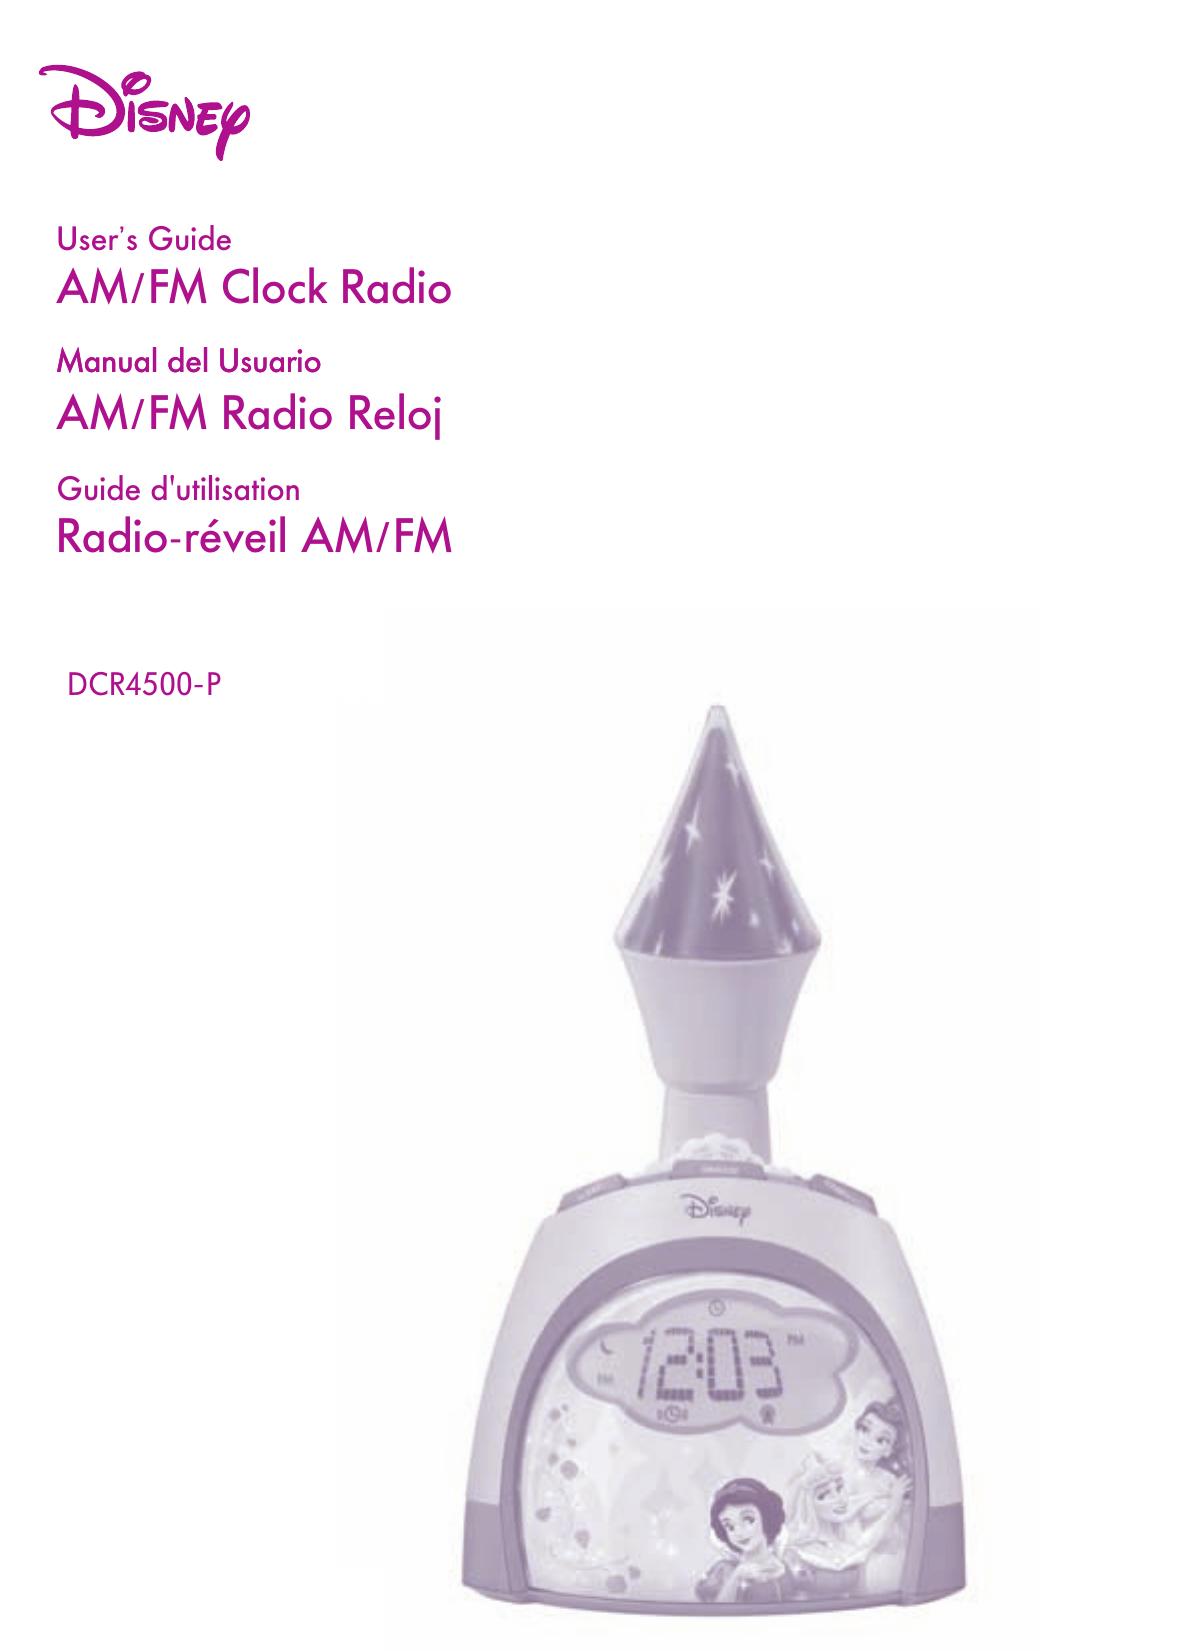 Disney DCR4500-P Clock Radio User Manual